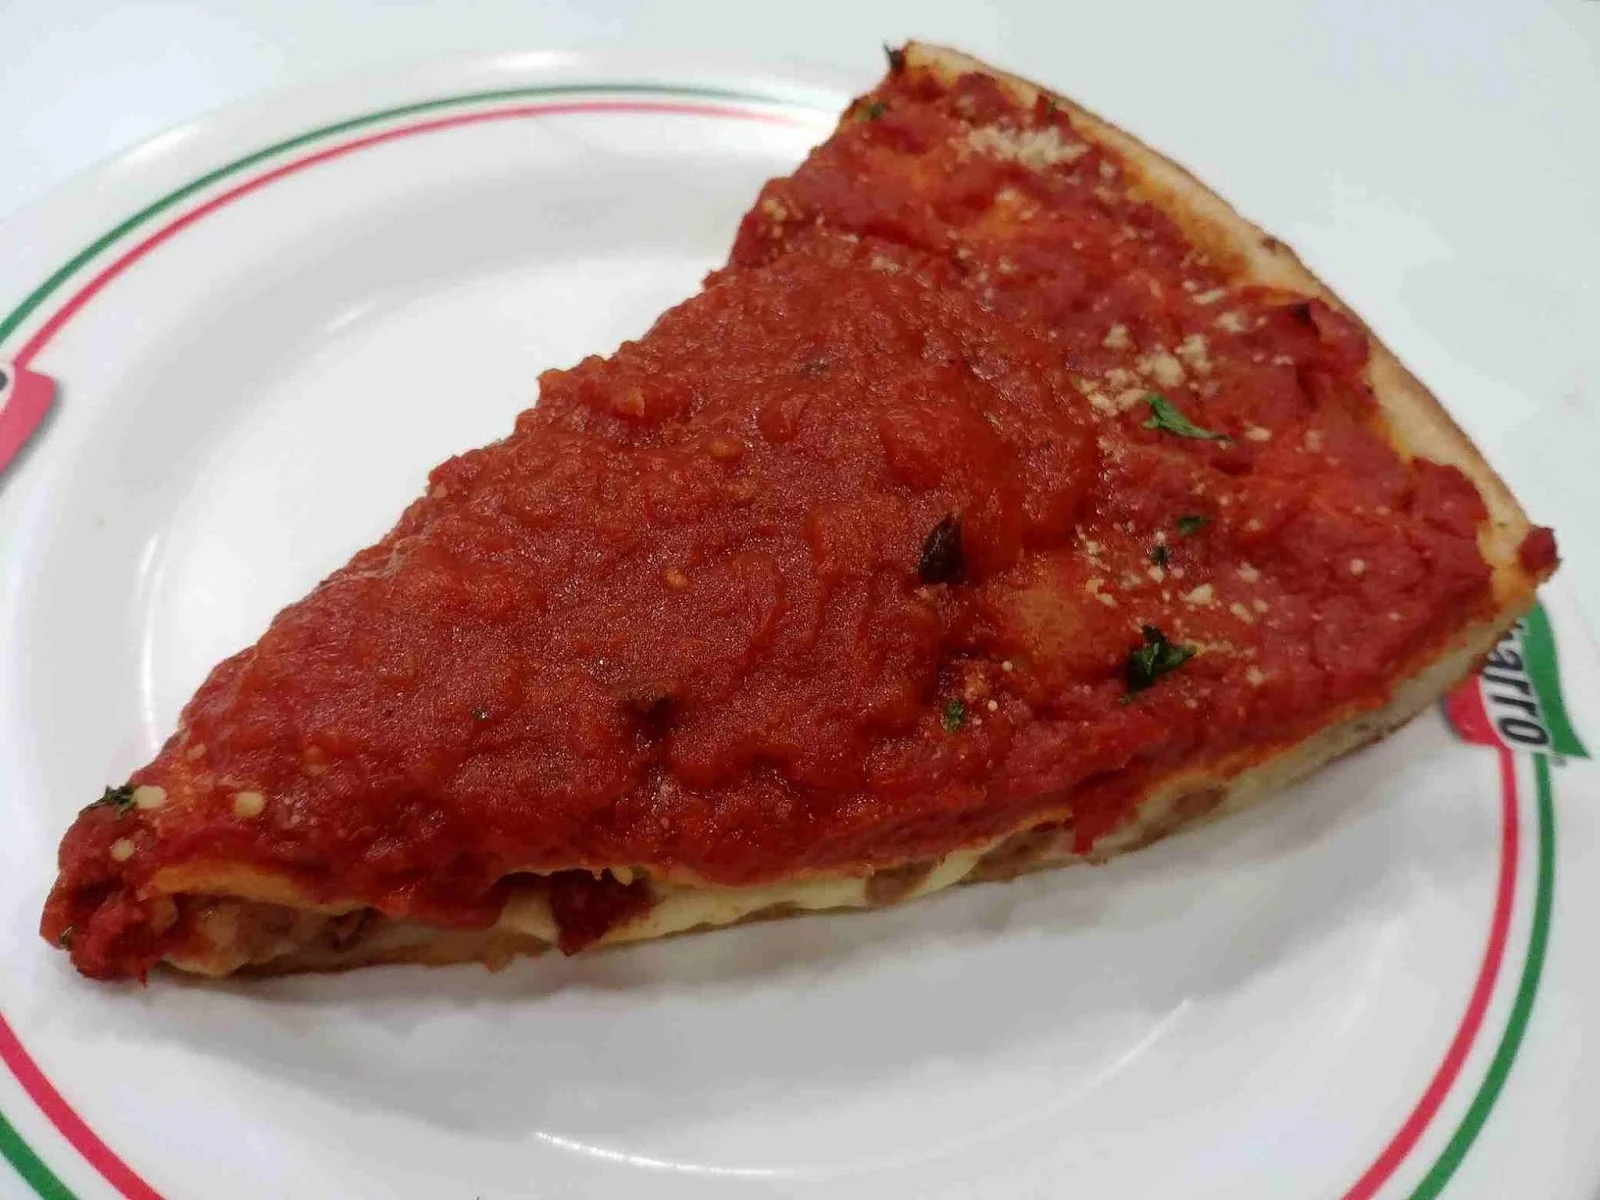 Sbarro Chicago deep dish pizza